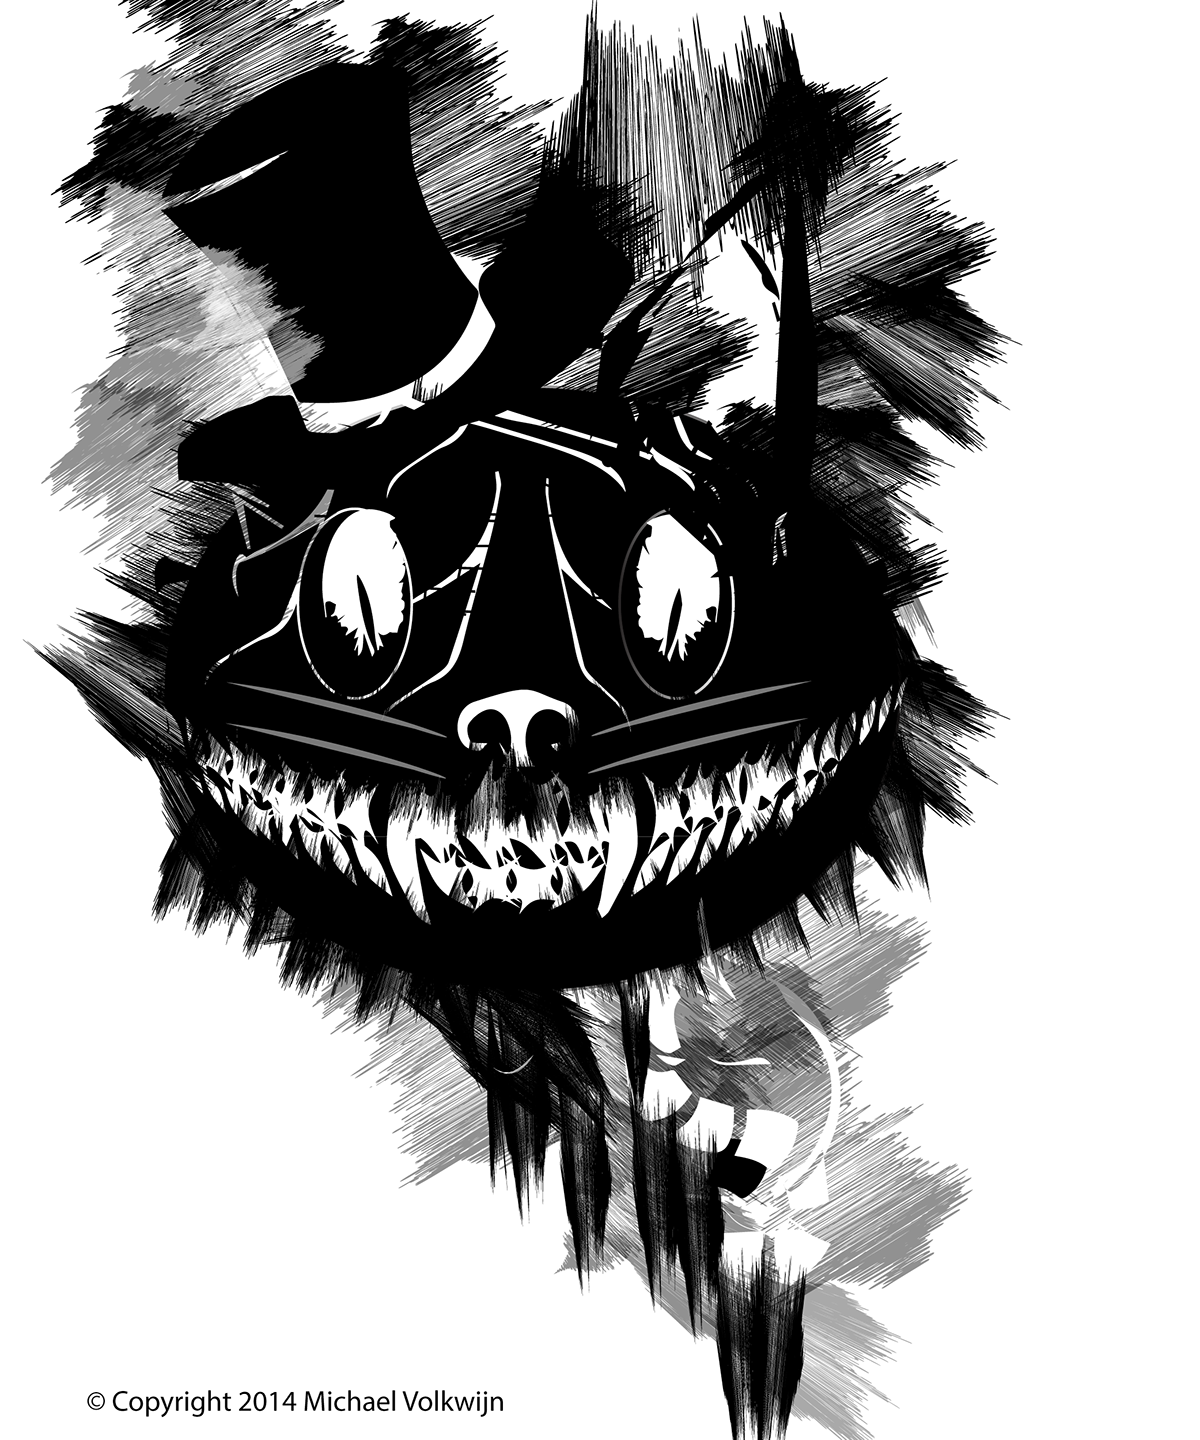 animals abstract dark blackandwhite weird gothic fantasy horror vector portrait art graphic surreal deer Panda 